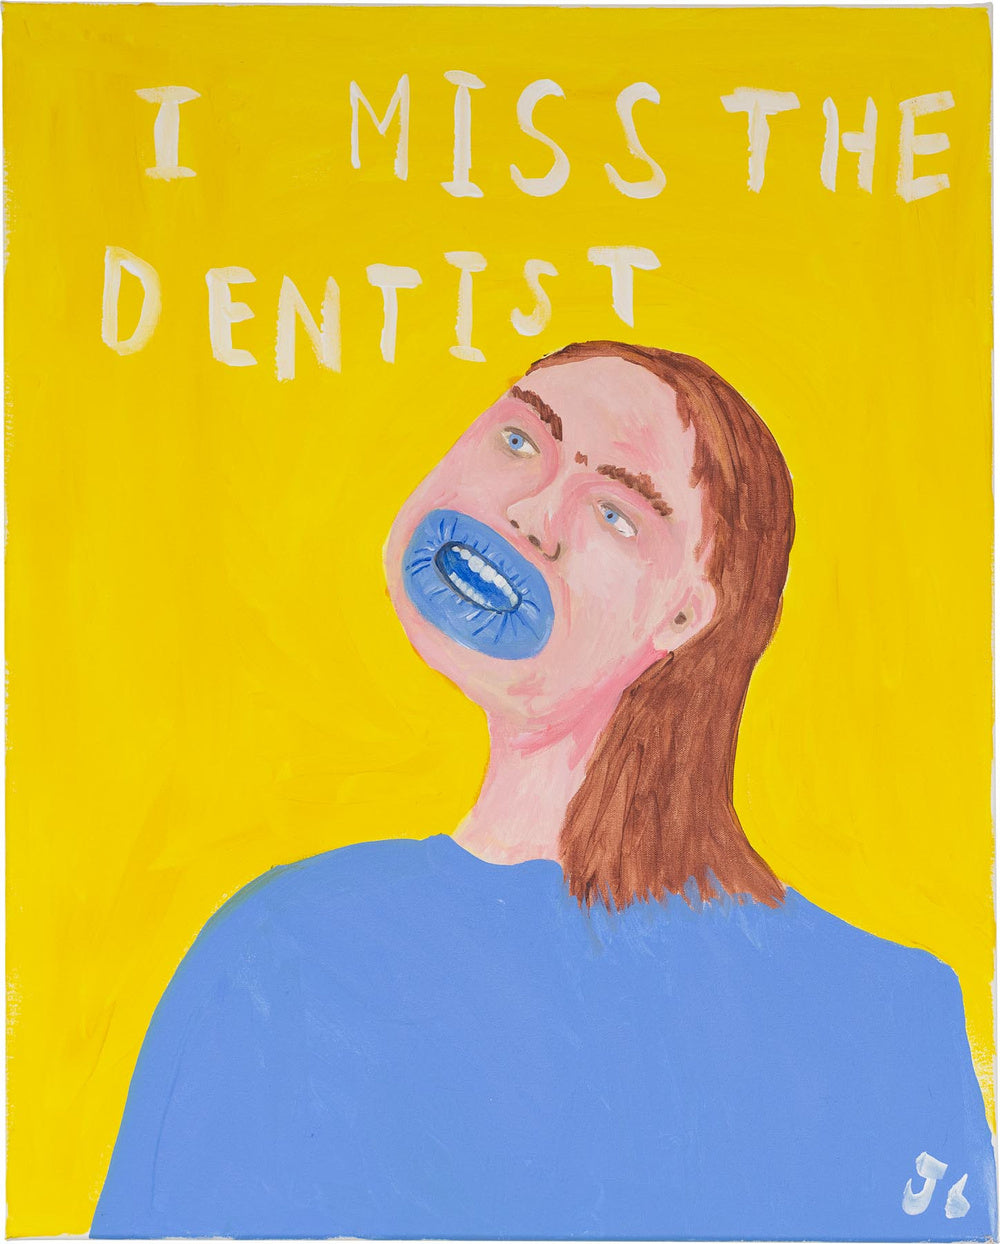 I Miss The Dentist